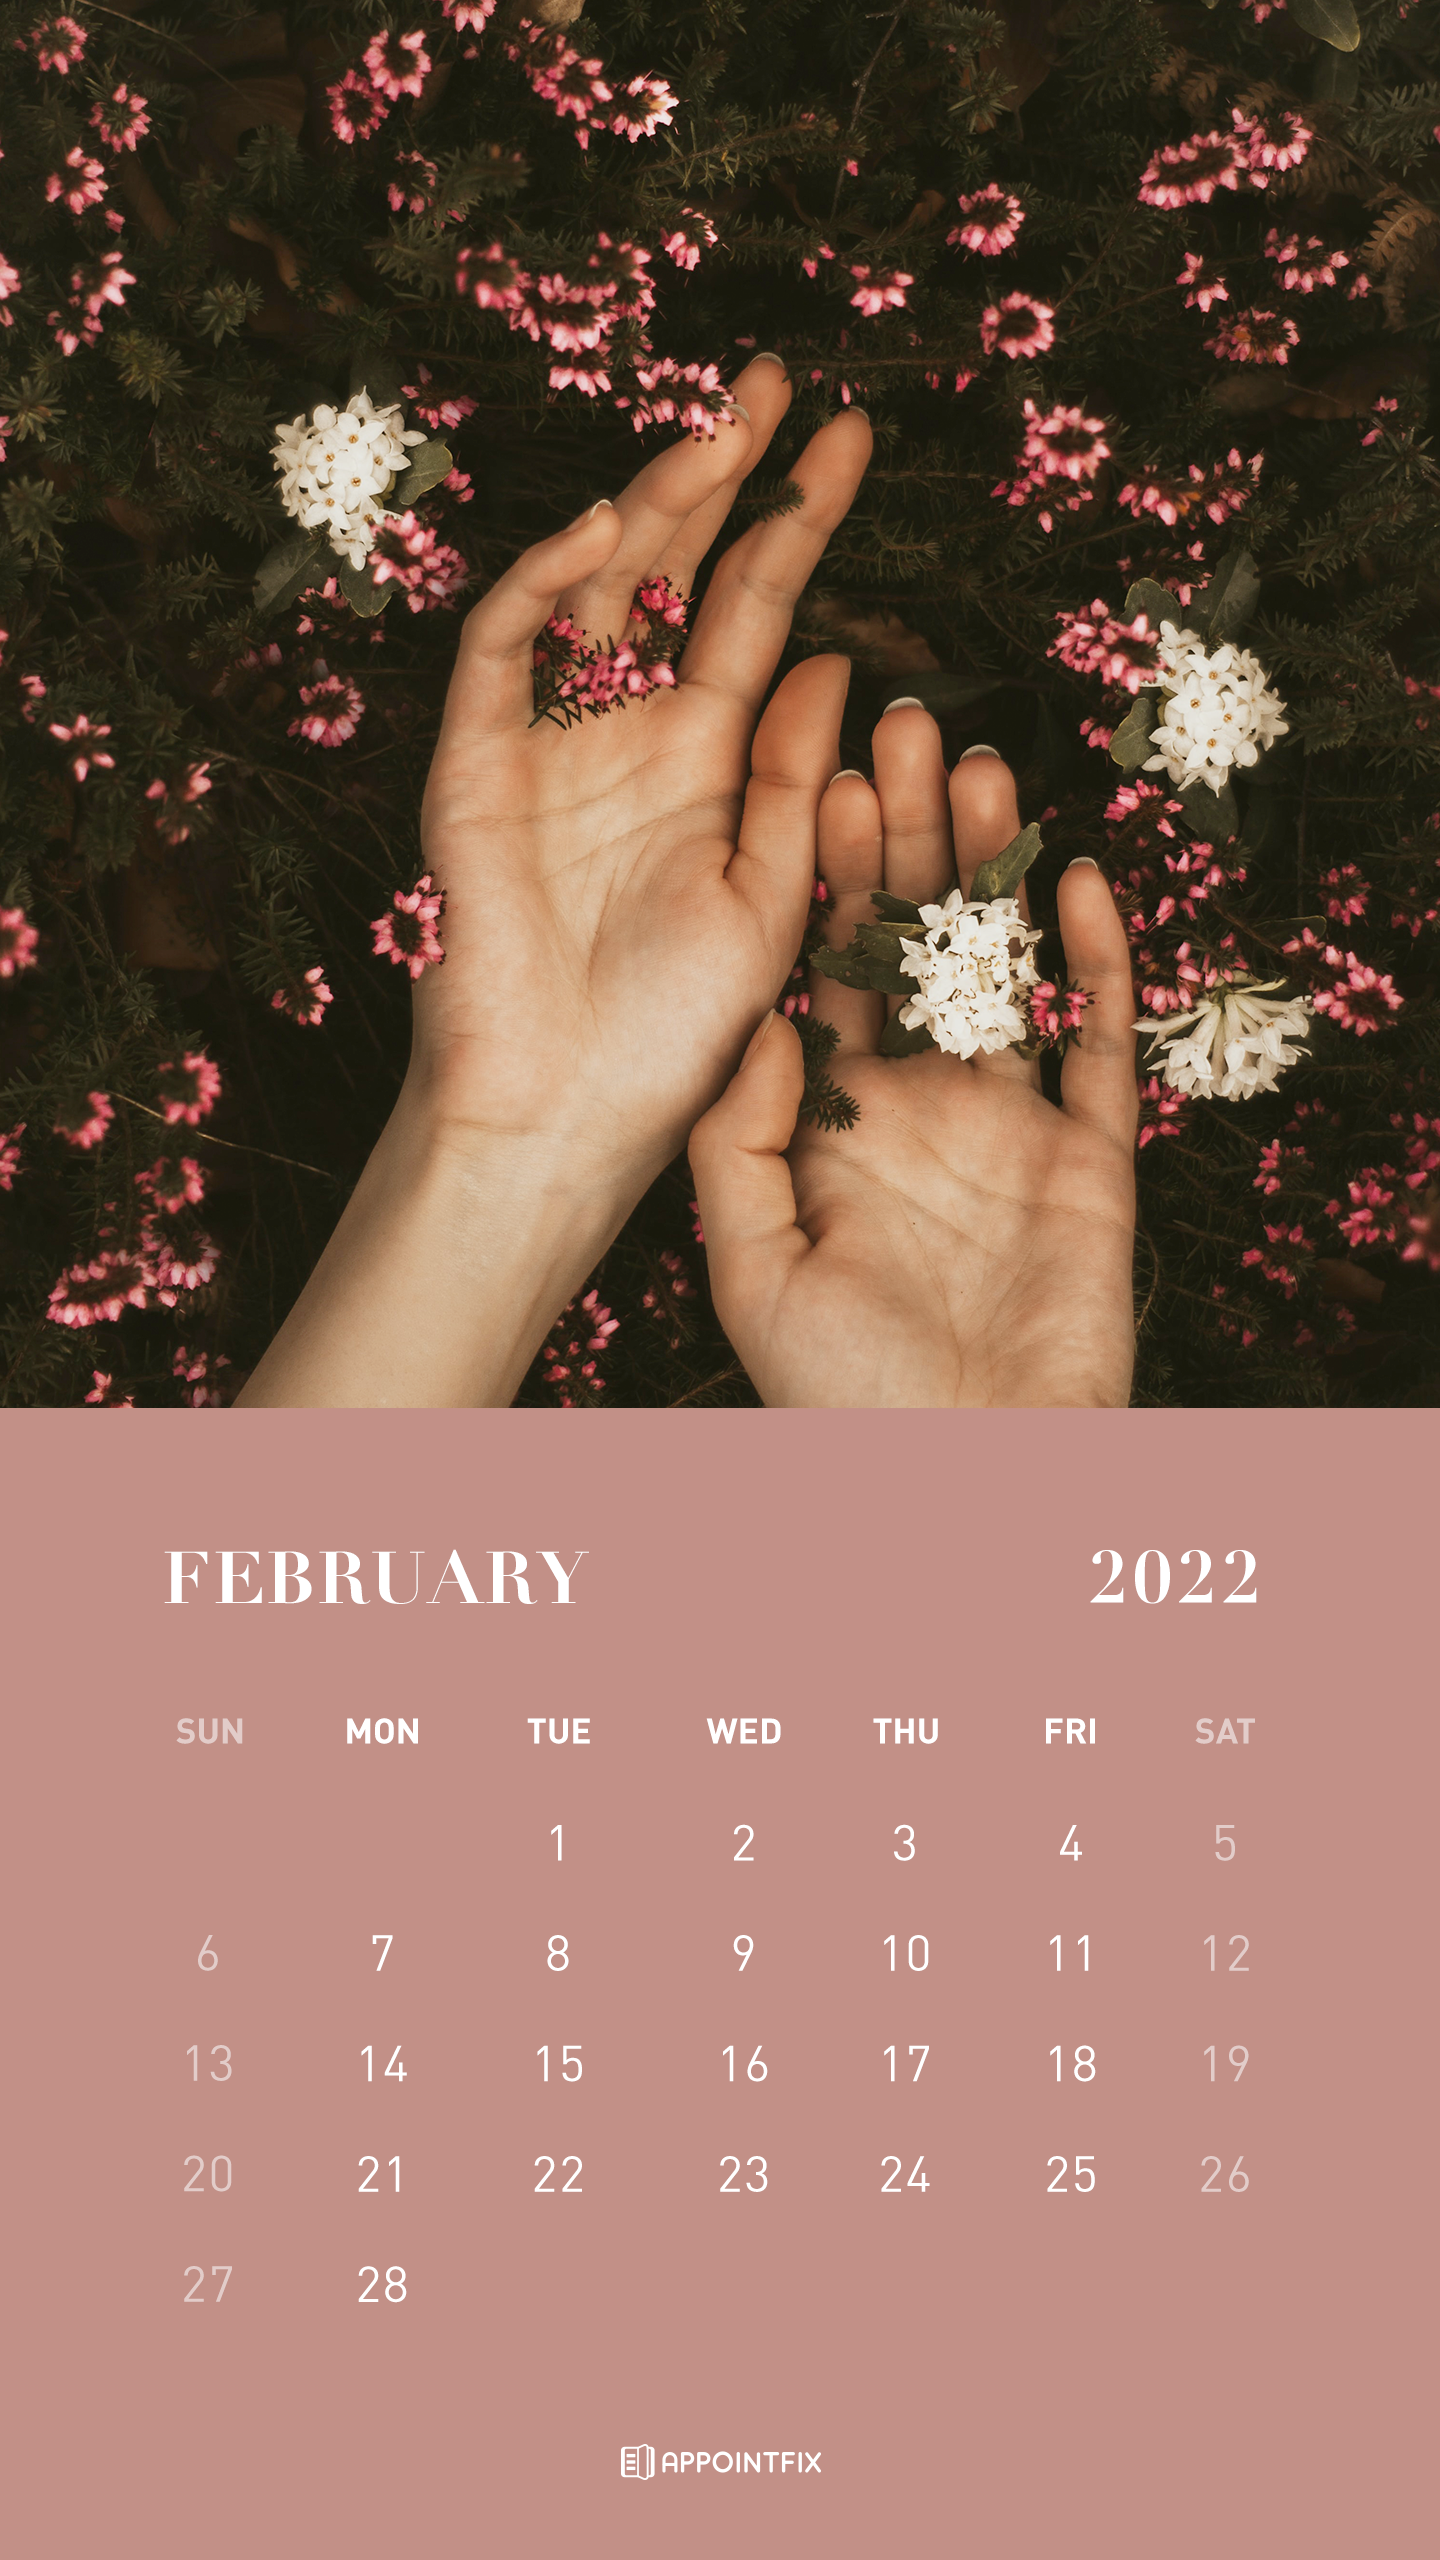 February 2022 Wallpaper Calendar Free February 2022 Calendar Wallpapers – Desktop & Mobile